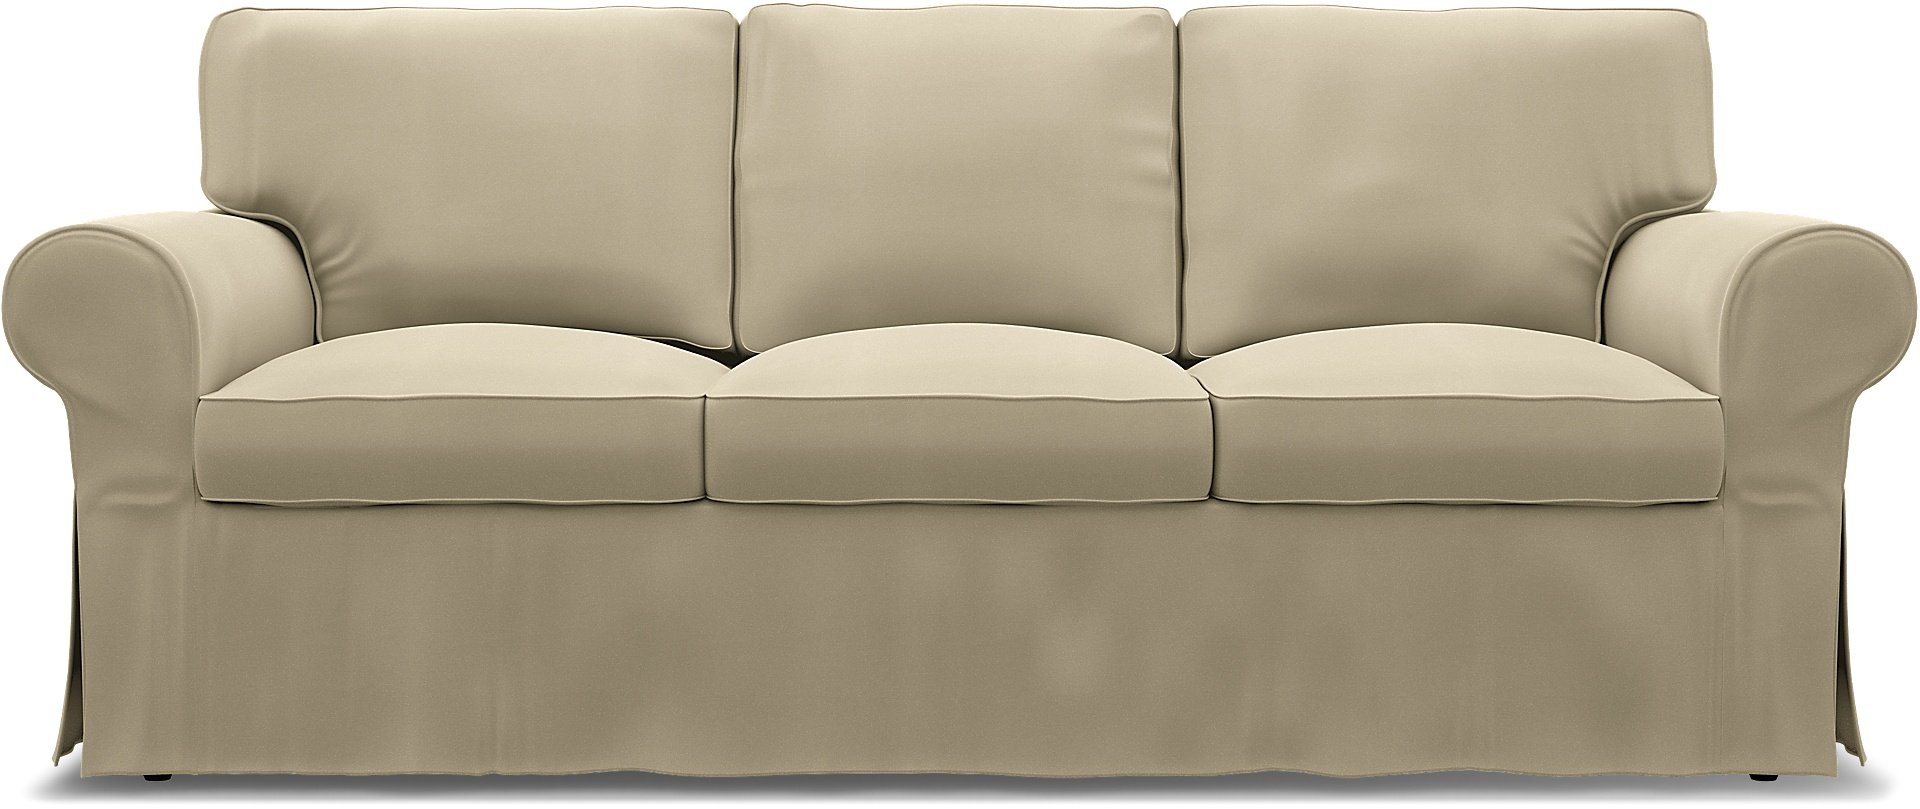 Stressvol Basistheorie kolf IKEA Ektorp, 3 Seater sofa cover with piping - Bemz | Bemz